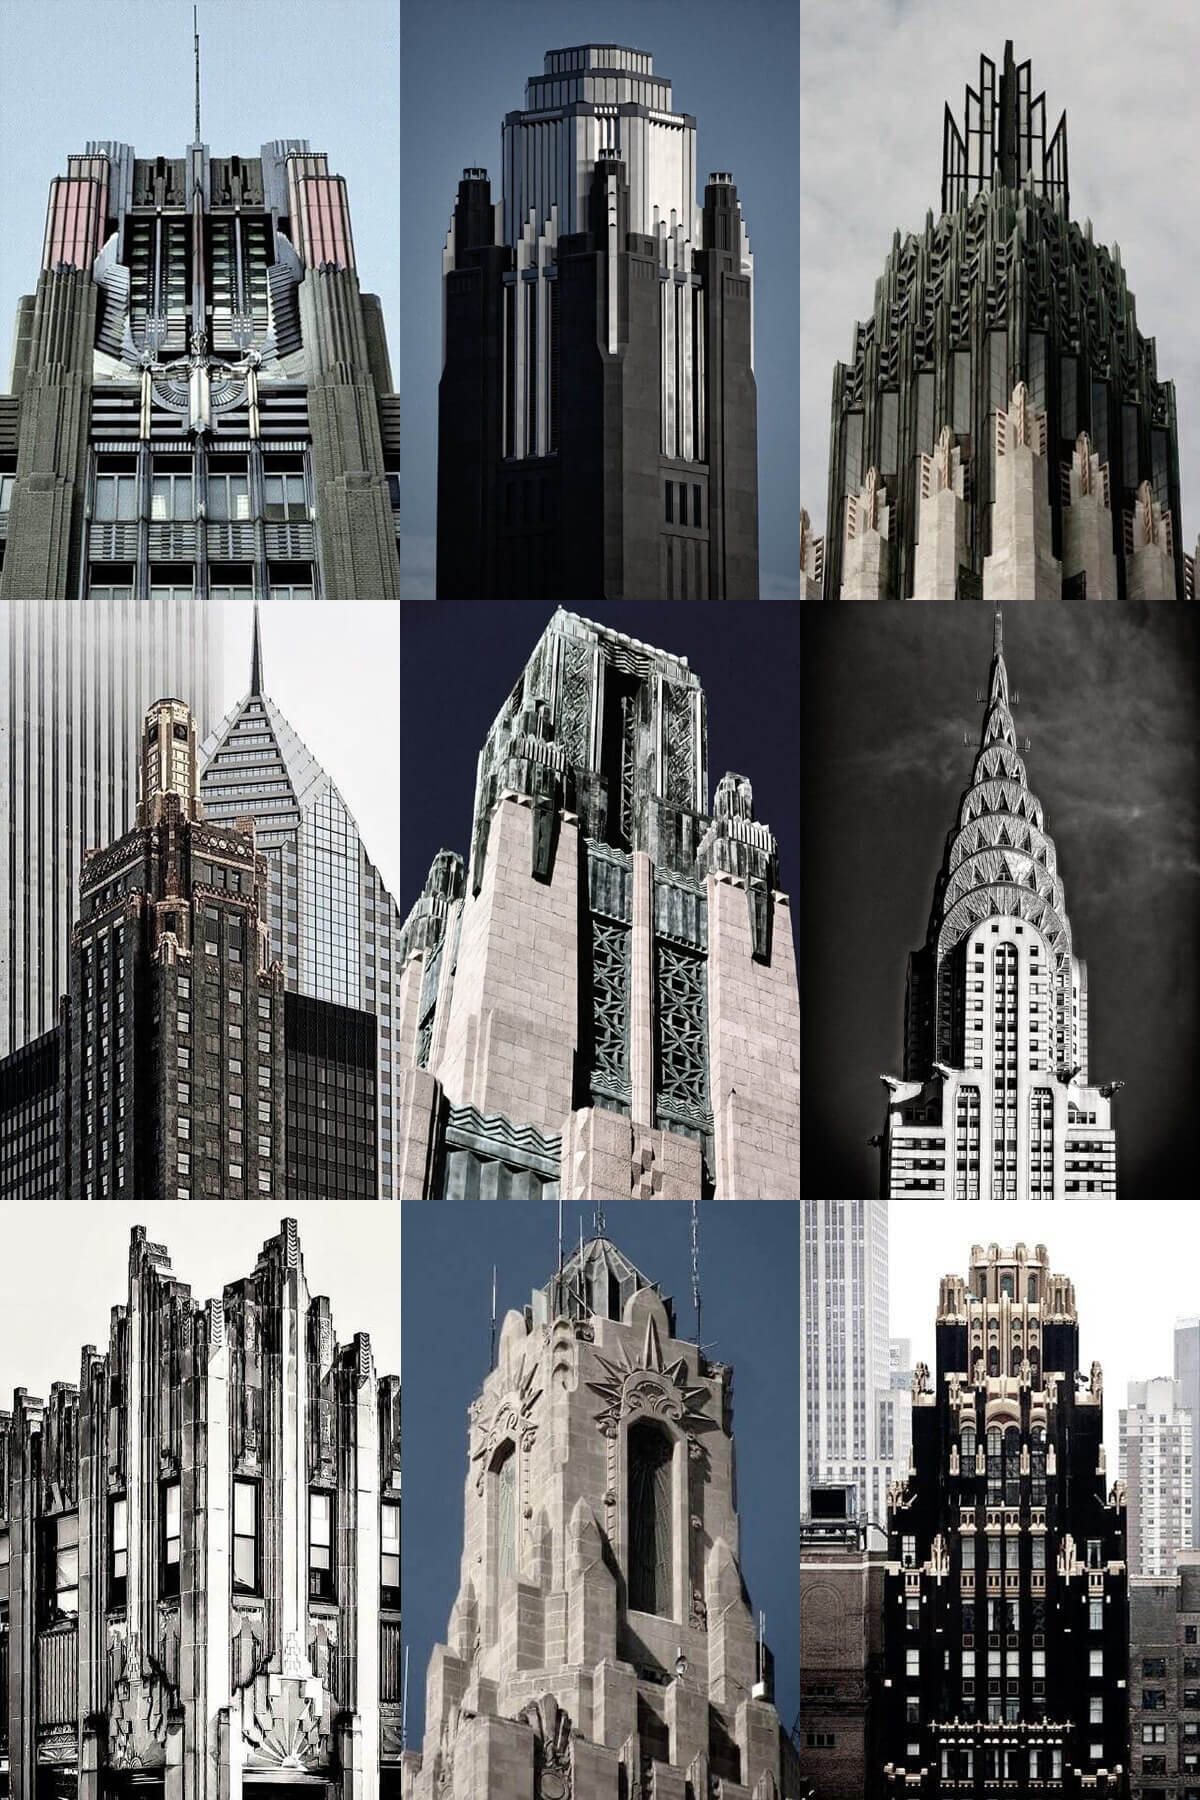 Art Deco Architecture - A Prominent Form in America's Landscape